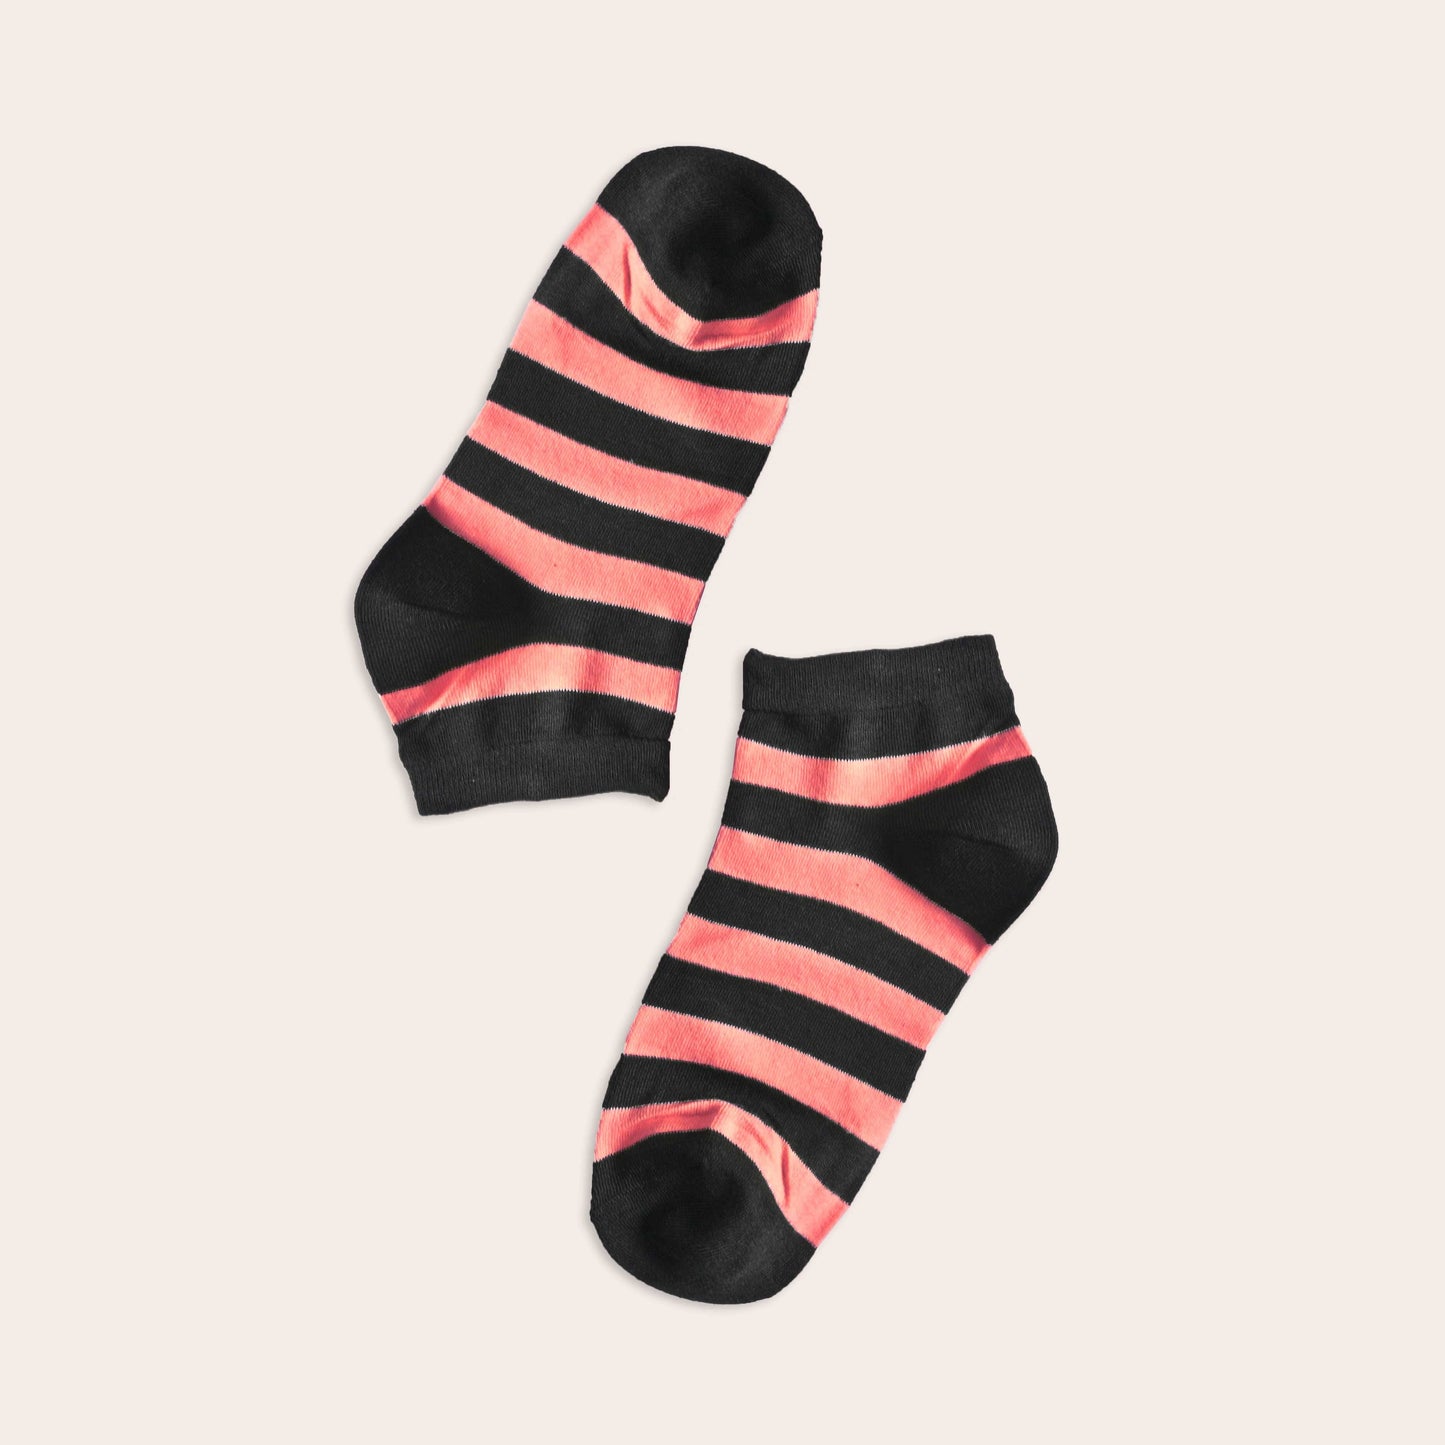 Tlia Men's Fashion Anklet Socks Socks SRL EUR 38-43 Tea Pink D1